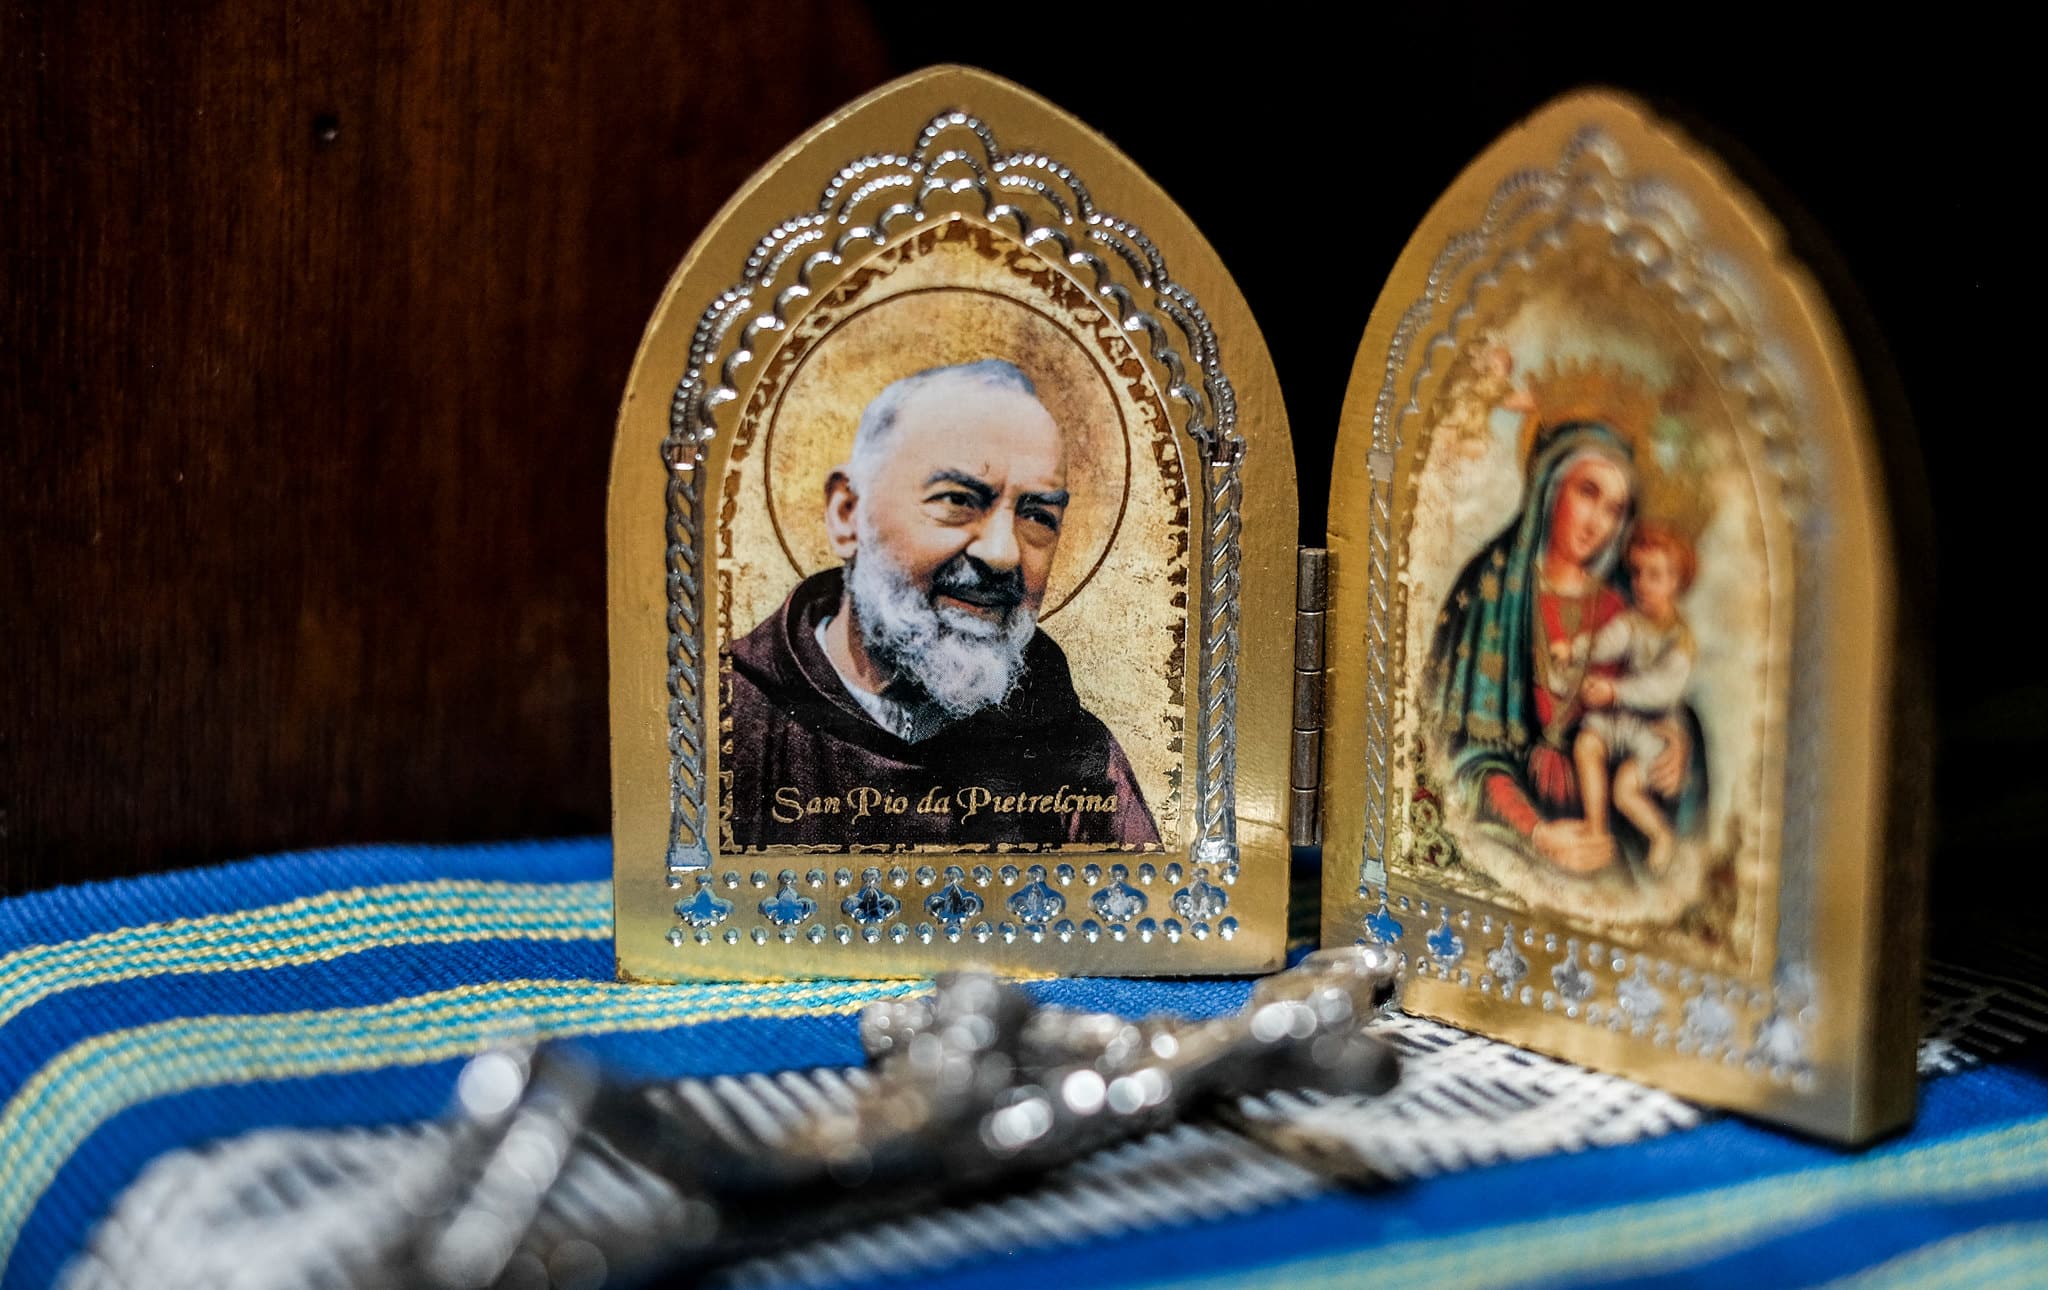 Photo of Padre Pio and the Madona by Bro. Jeffrey Pioquinto, SJ, via Flickr